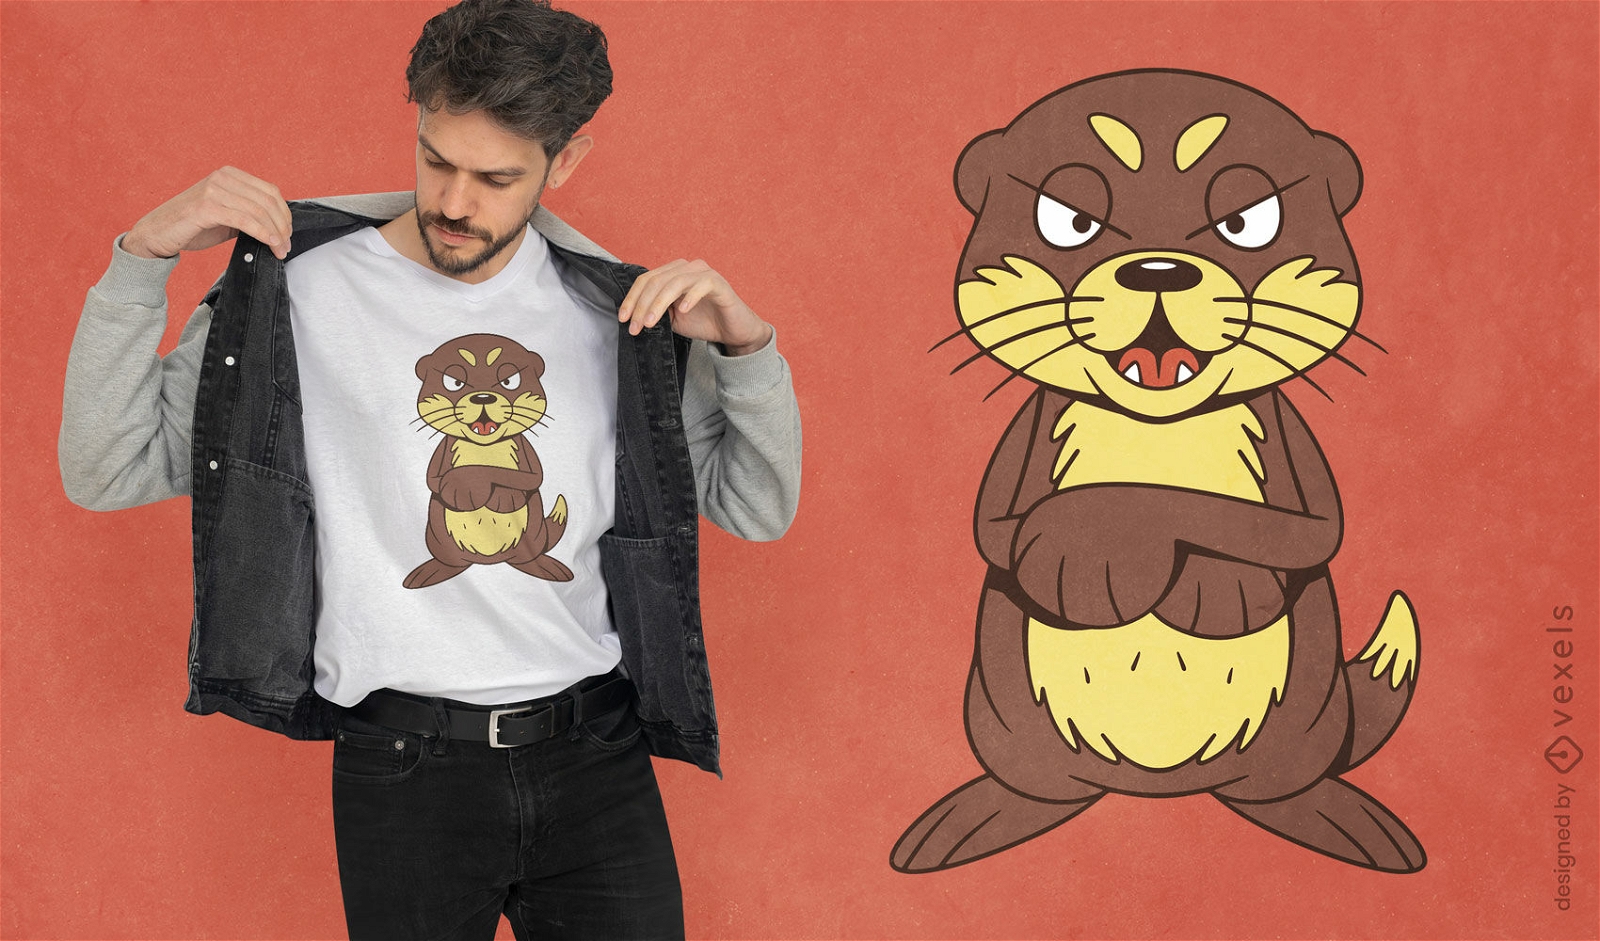 Bad otter t-shirt design